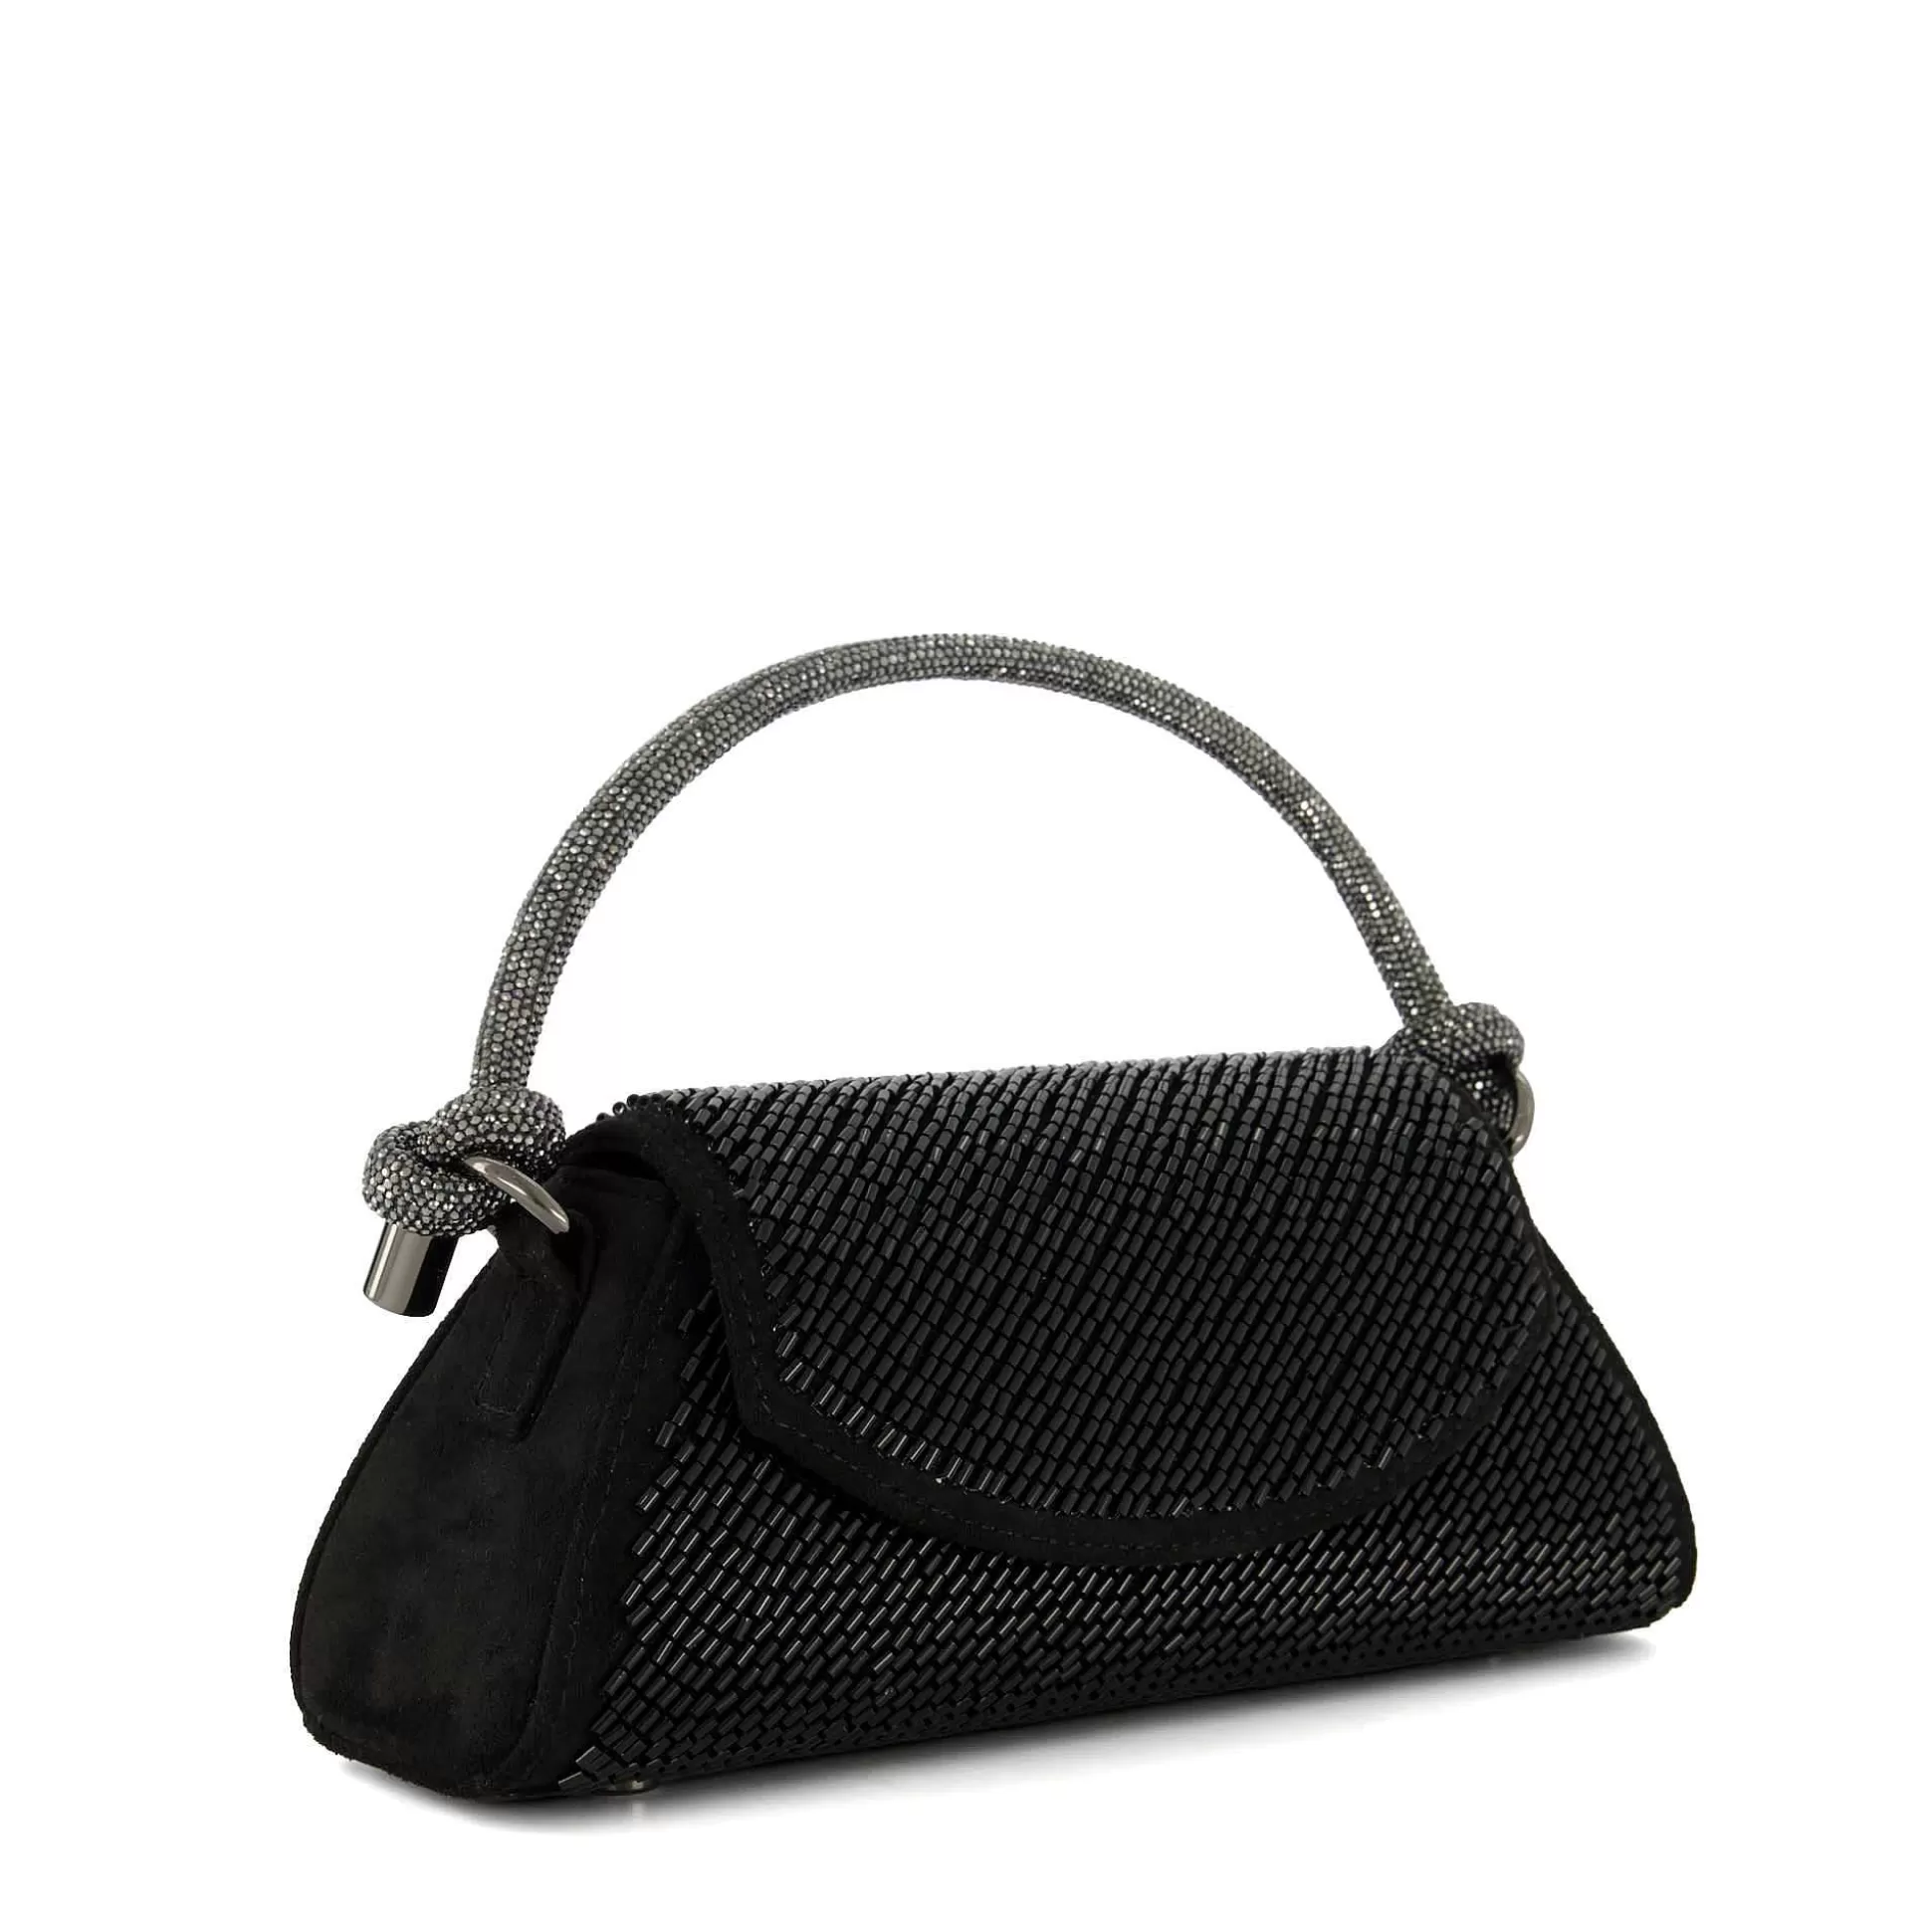 Dune London BRYNLEYS - BLACK- Handbags | Gifts